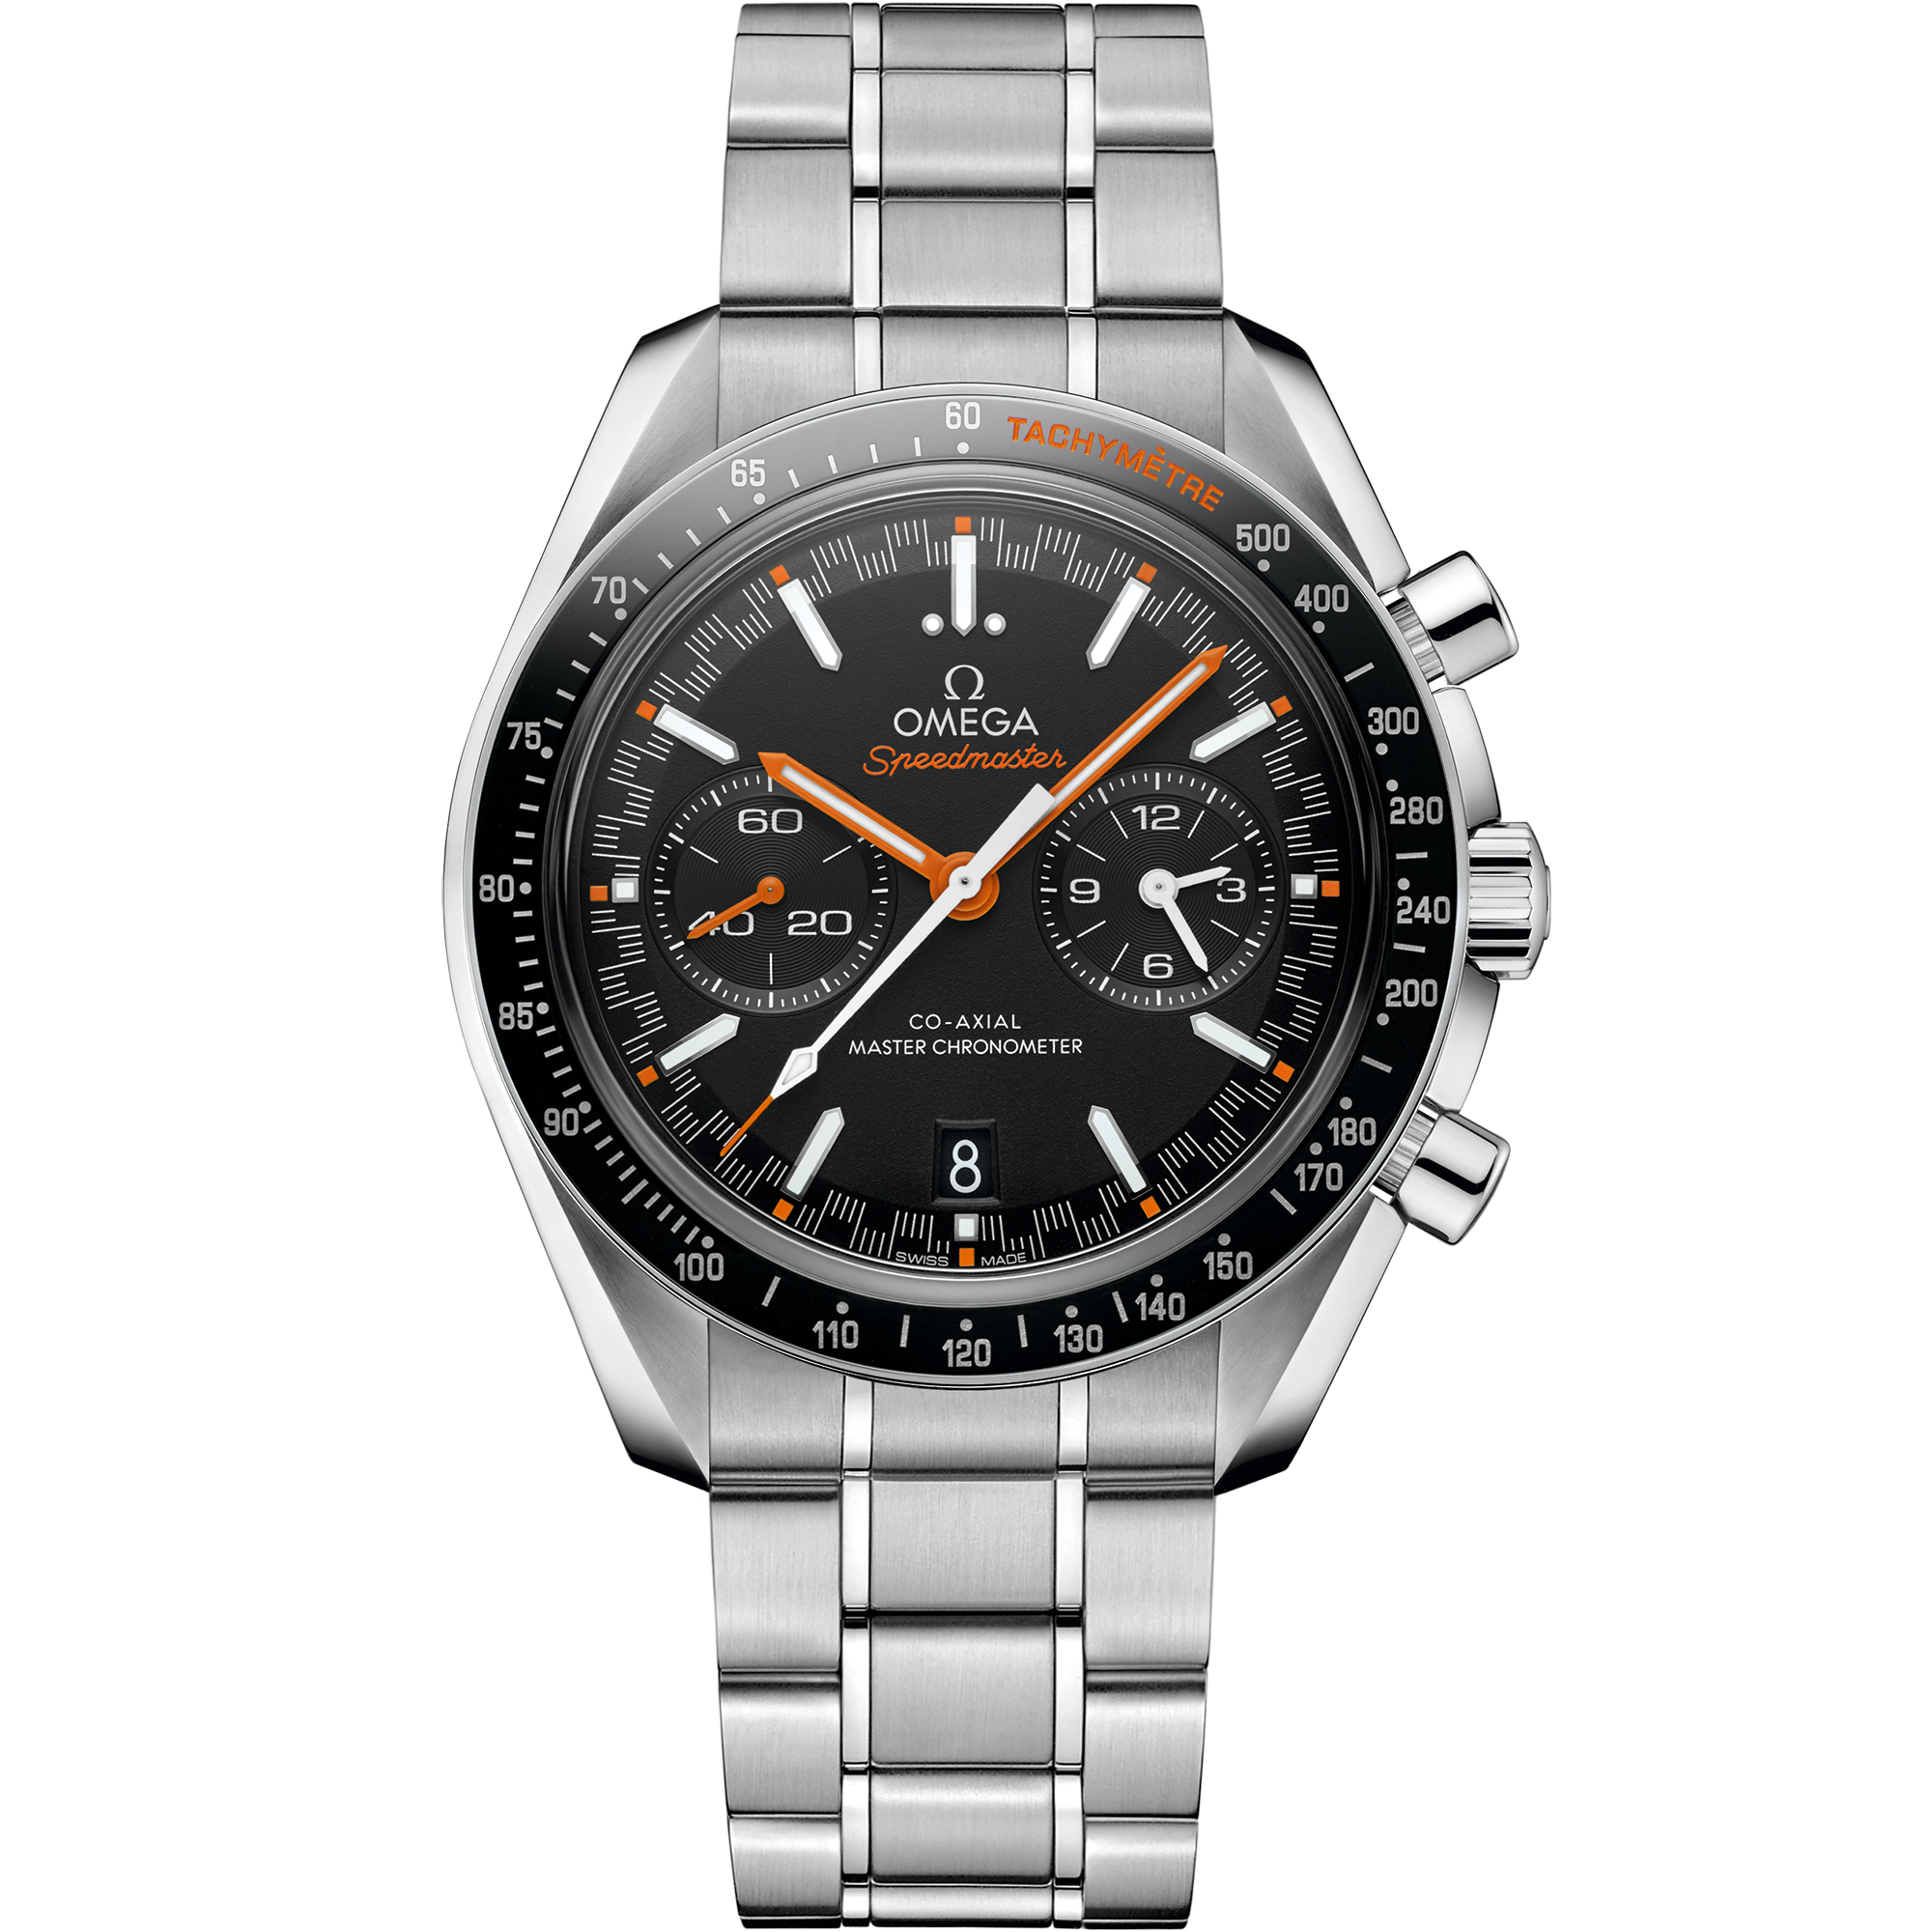 Racing Speedmaster Steel Chronograph Watch 329.32.44.51.01.001 | OMEGA US®